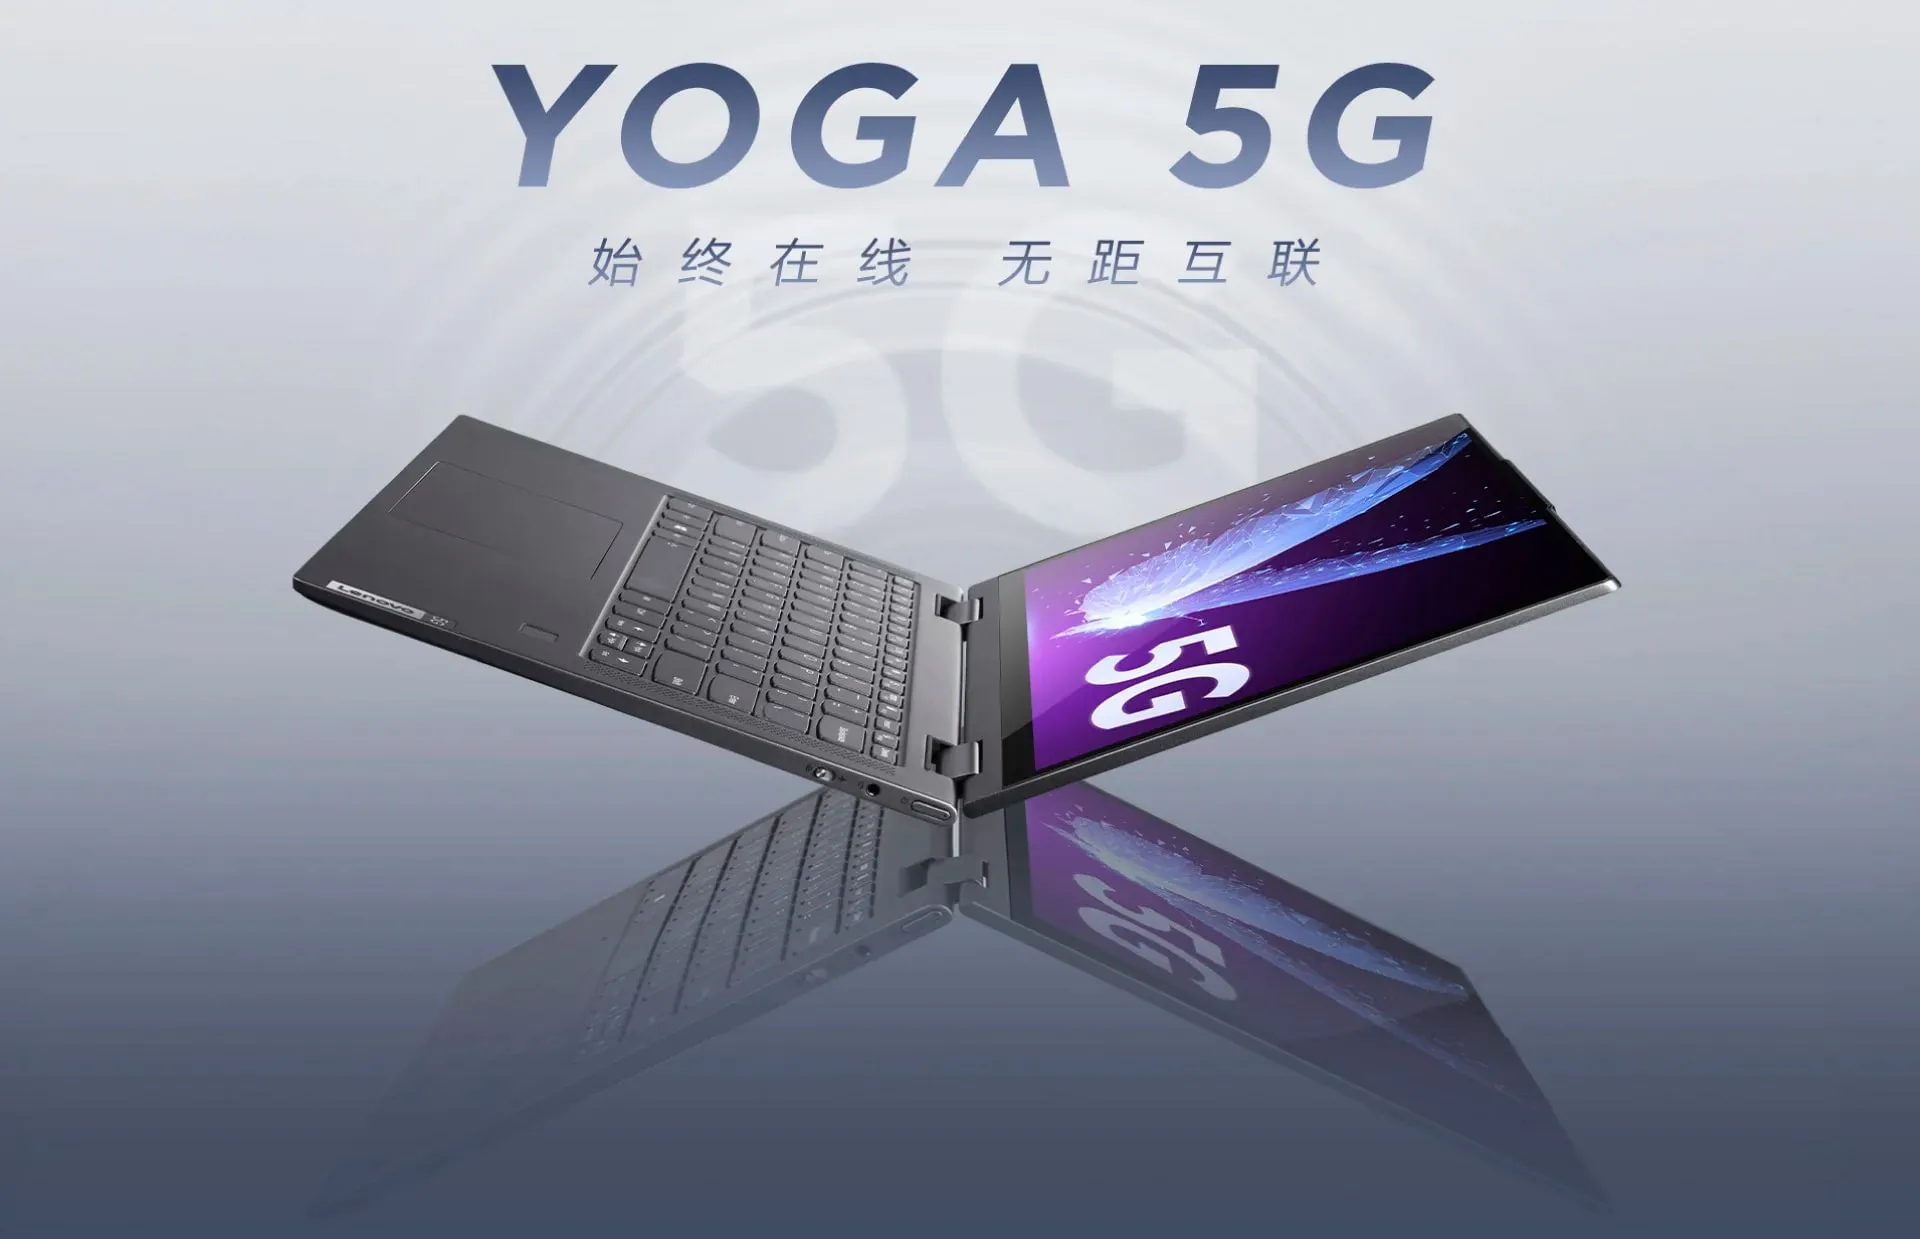 Ноутбук Lenovo Yoga 5G с процессором Snapdragon 8cx представлен официально